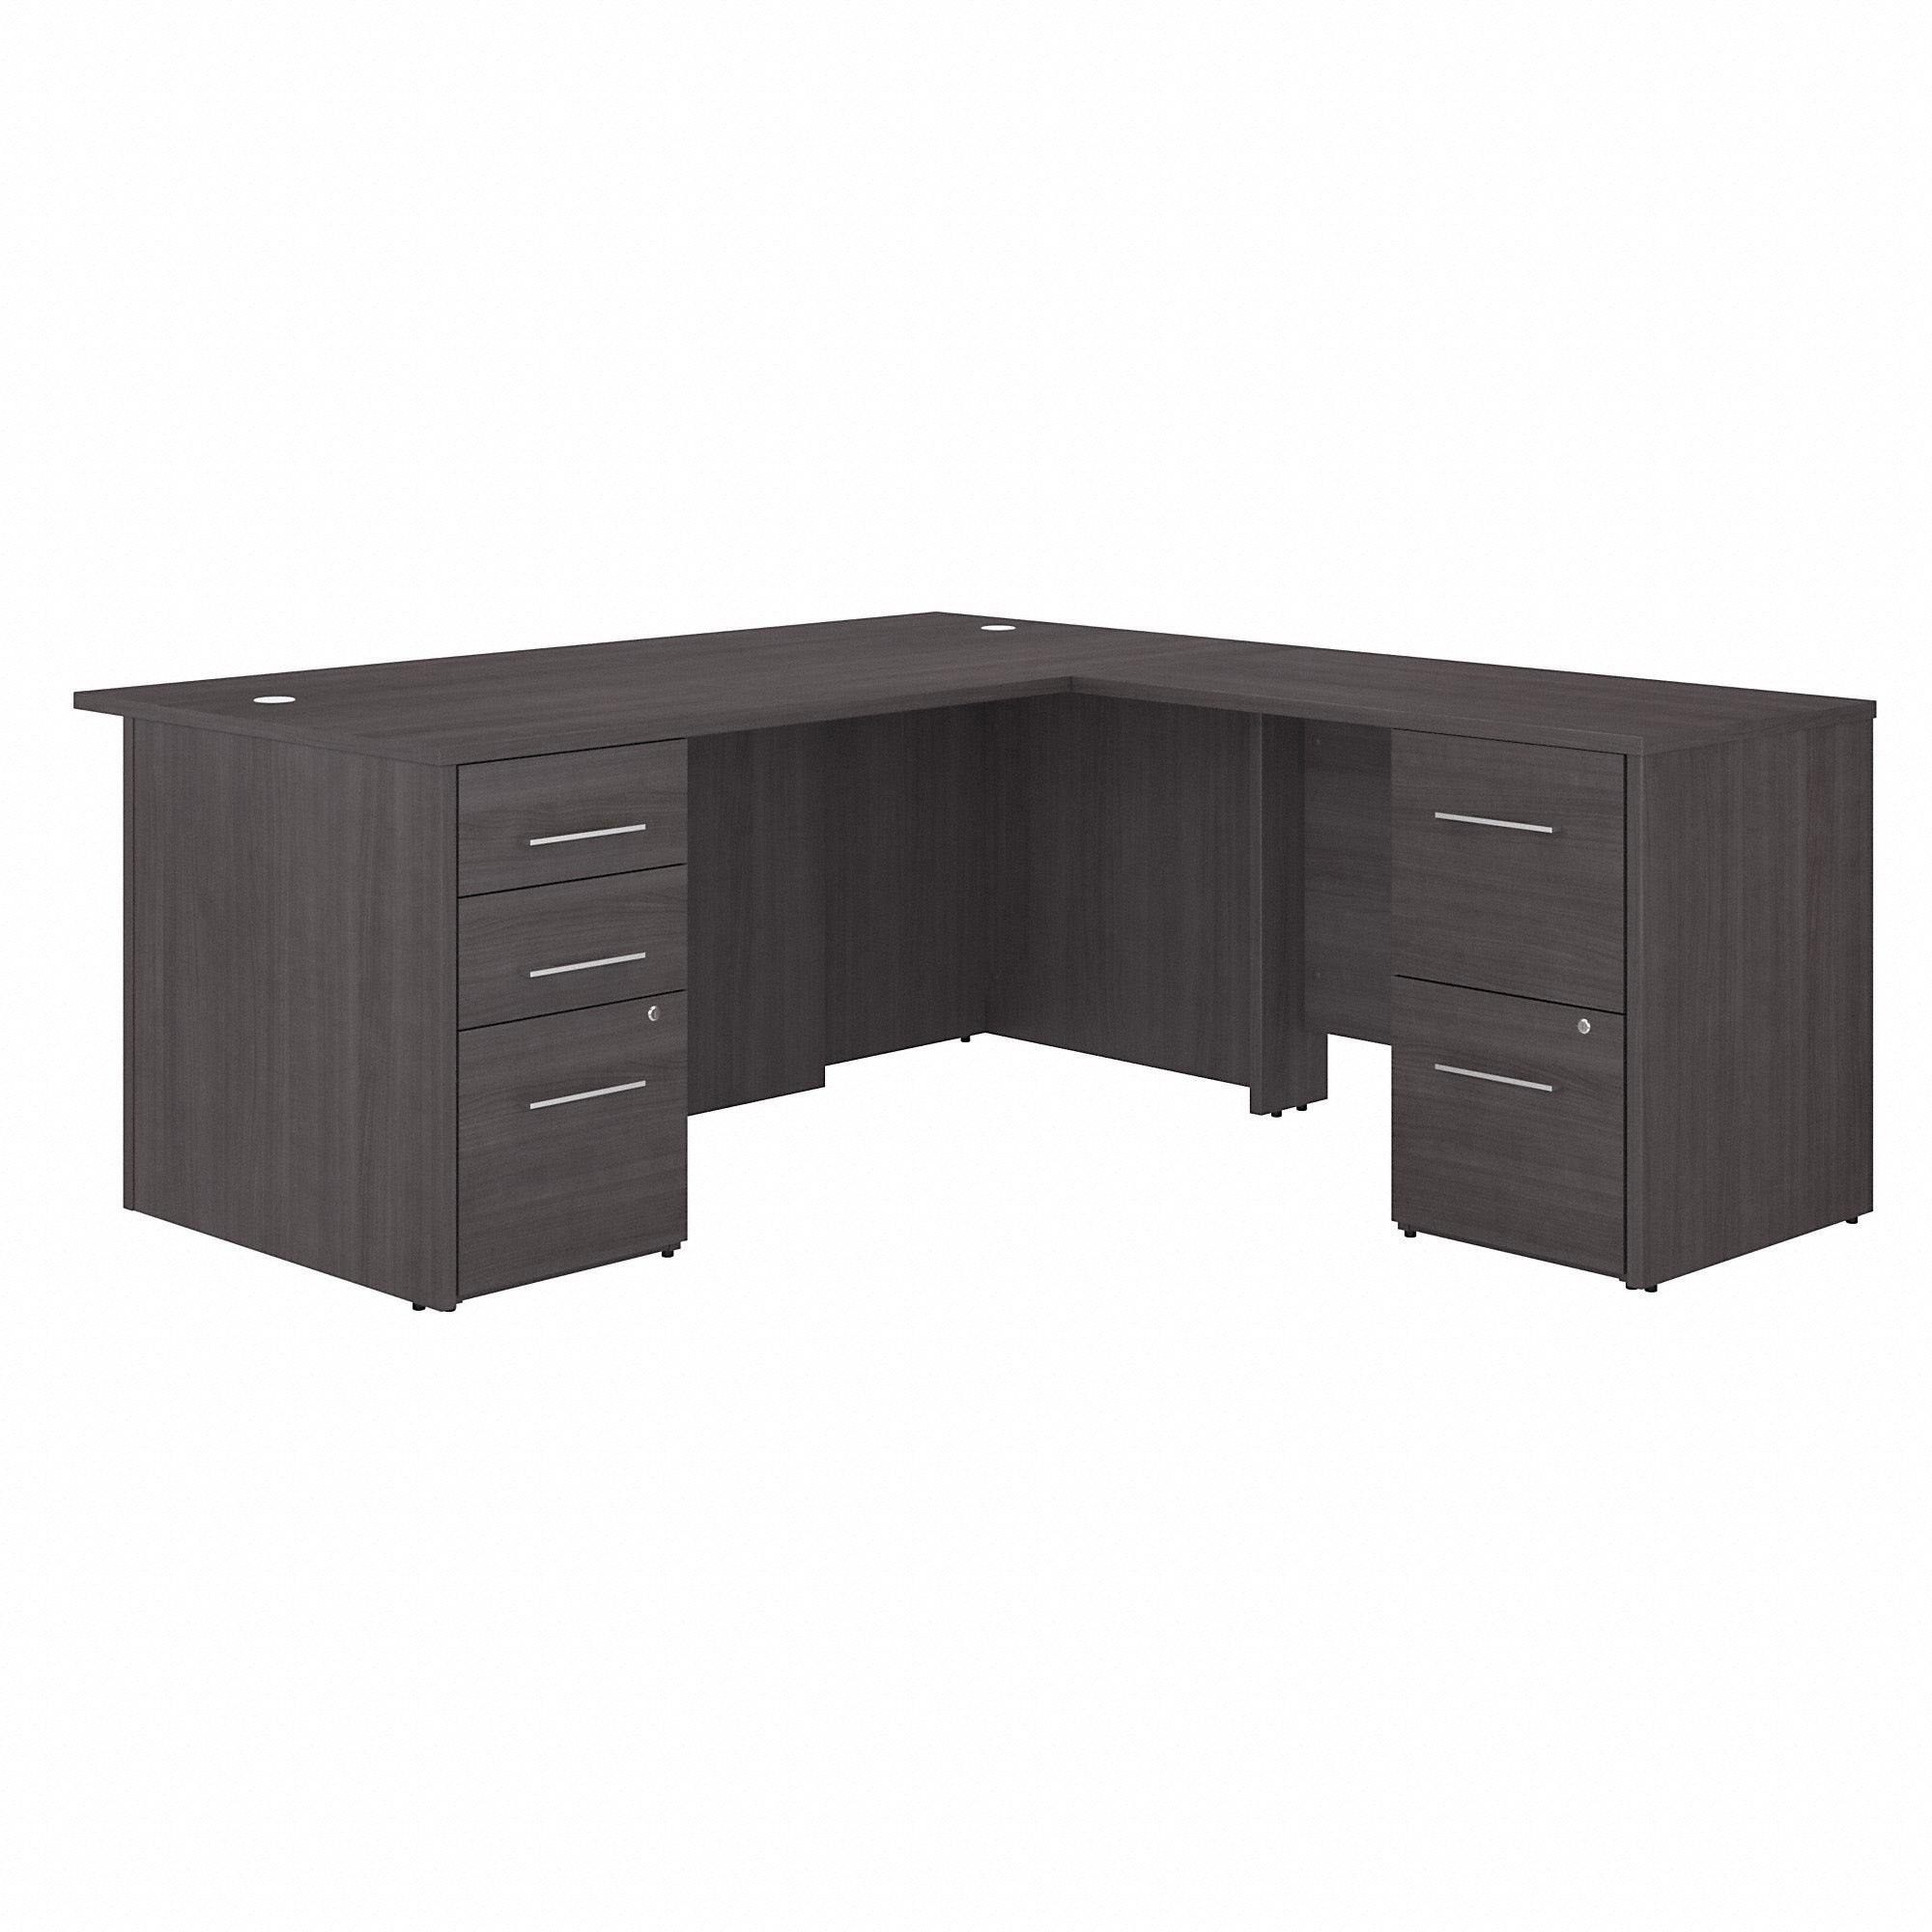 Bush Business Furniture Office 500 Storm Gray Desk - 77.1" x 71"29.8" - 5 x File, Box Drawer(s) - Finish: Storm Gray, Thermofused Laminate (TFL) - 1